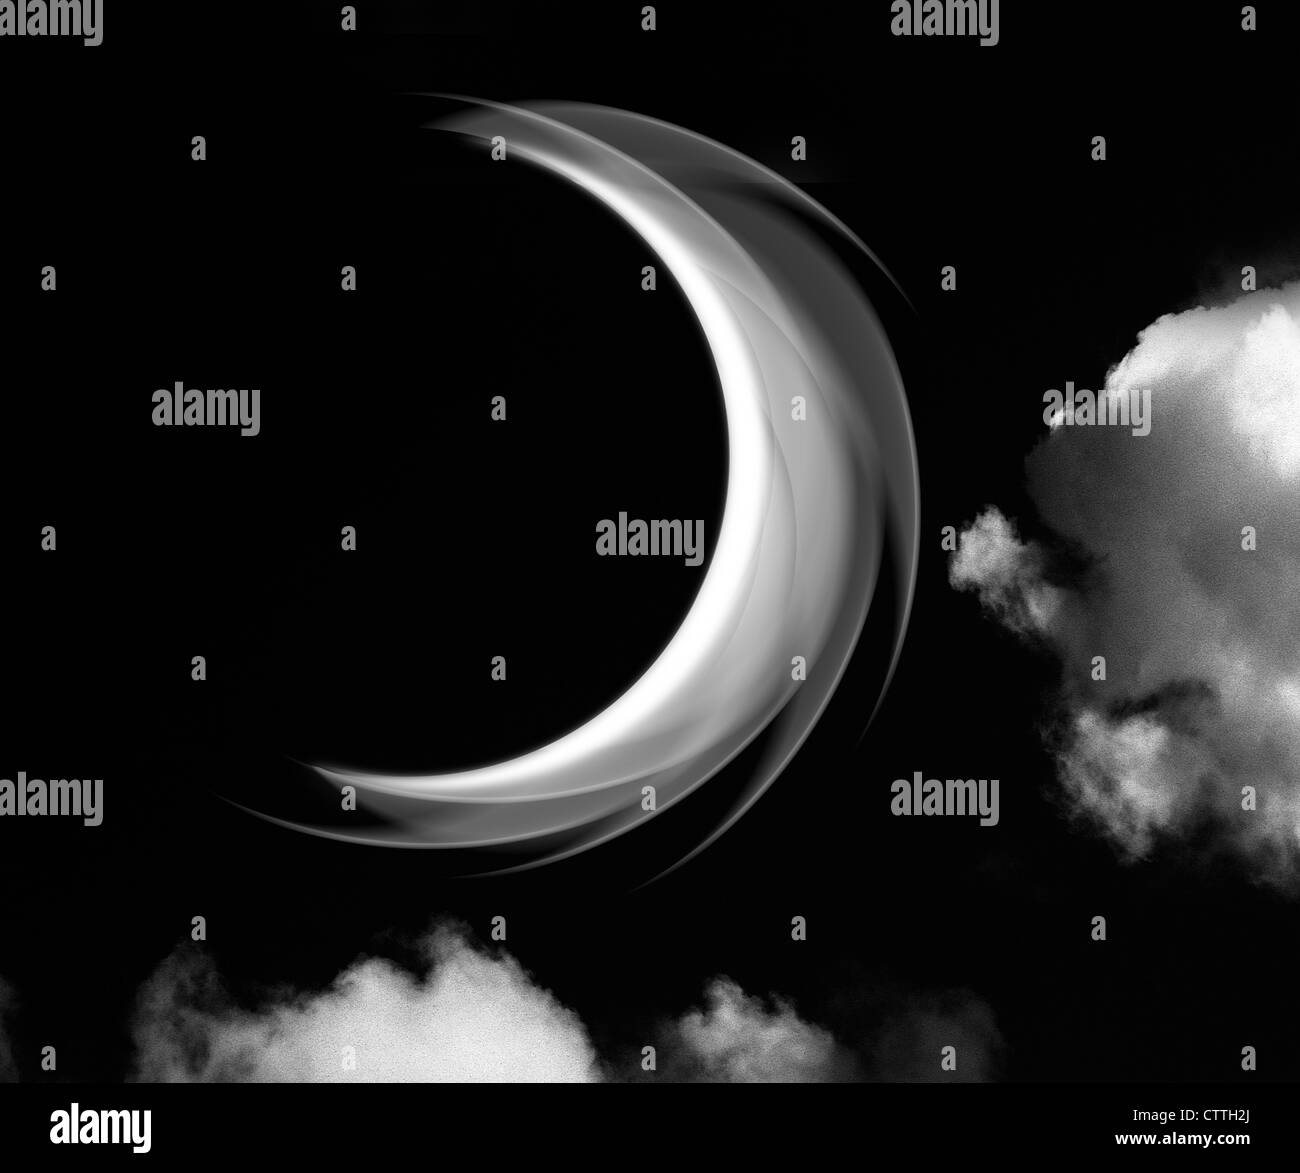 A fantasy cloudscape a crescent moon between clouds. Stock Photo